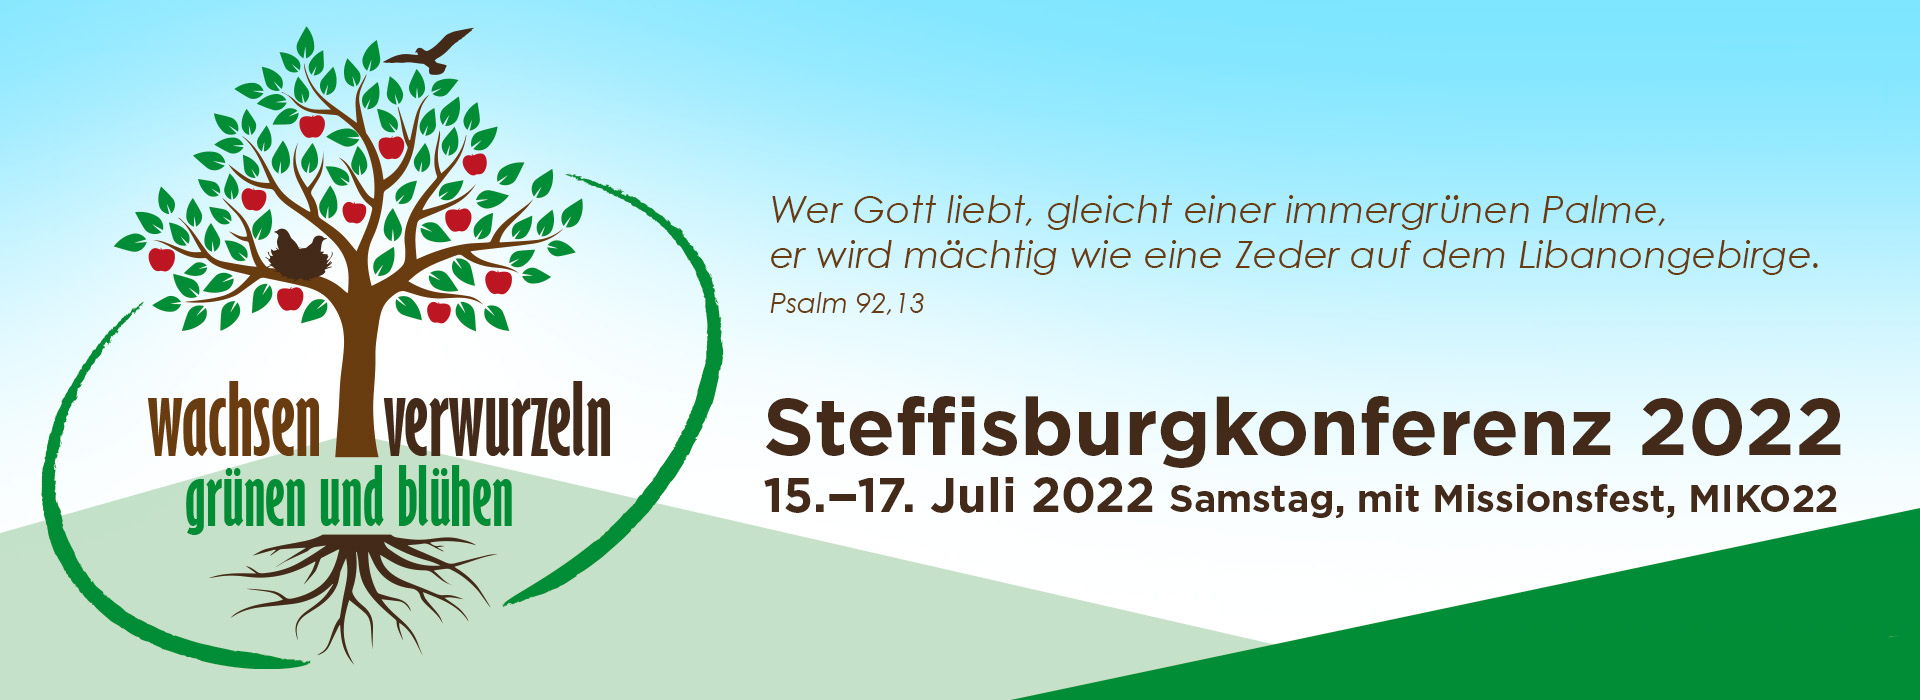 Steffisburgkonferenz 2022